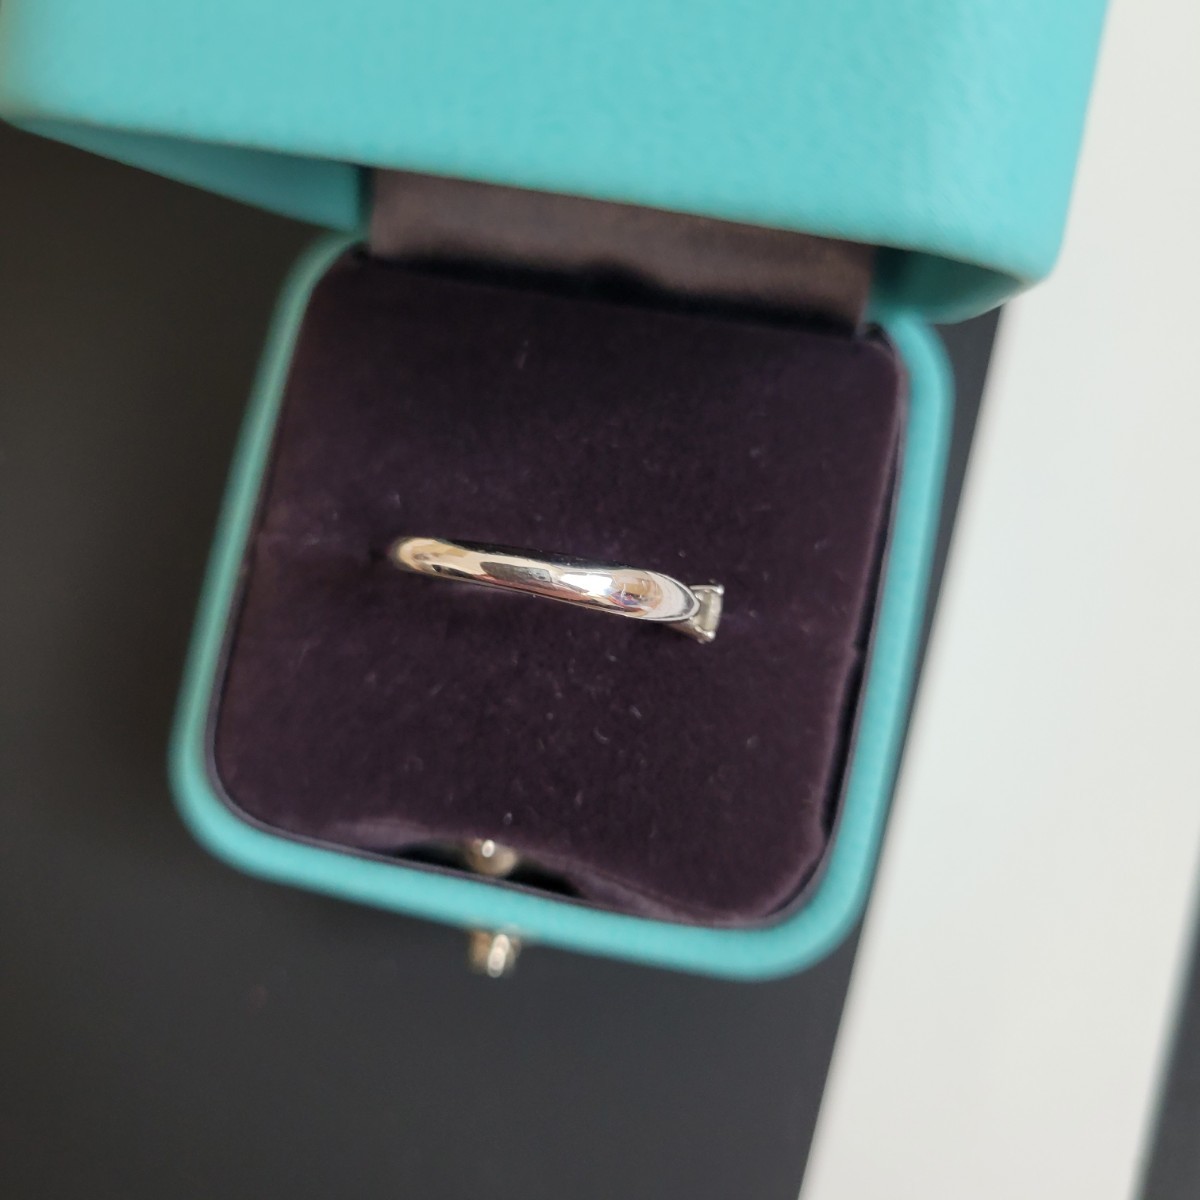  Tiffany TIFFANY&CO. is - moni - ring diamond platinum box expert evidence 